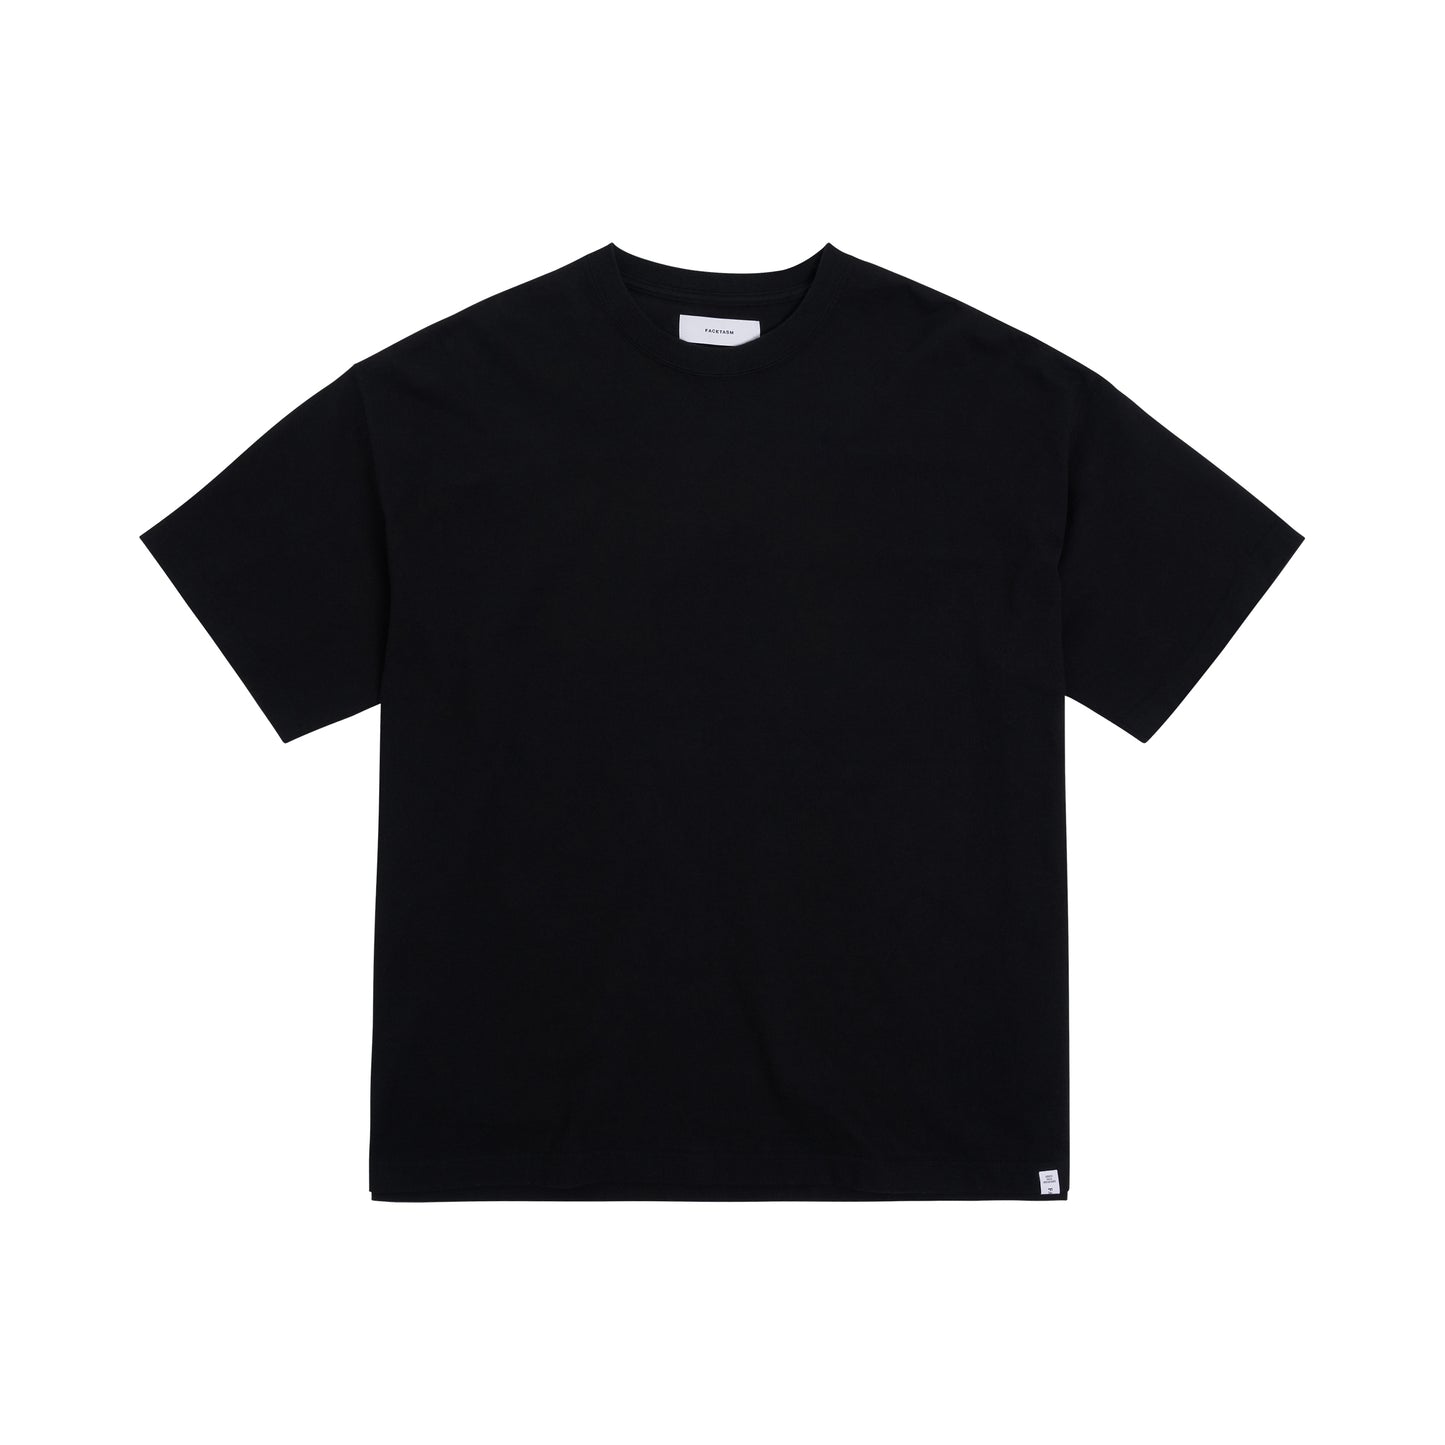 Signature Knitted Rib Big T-Shirt in Black